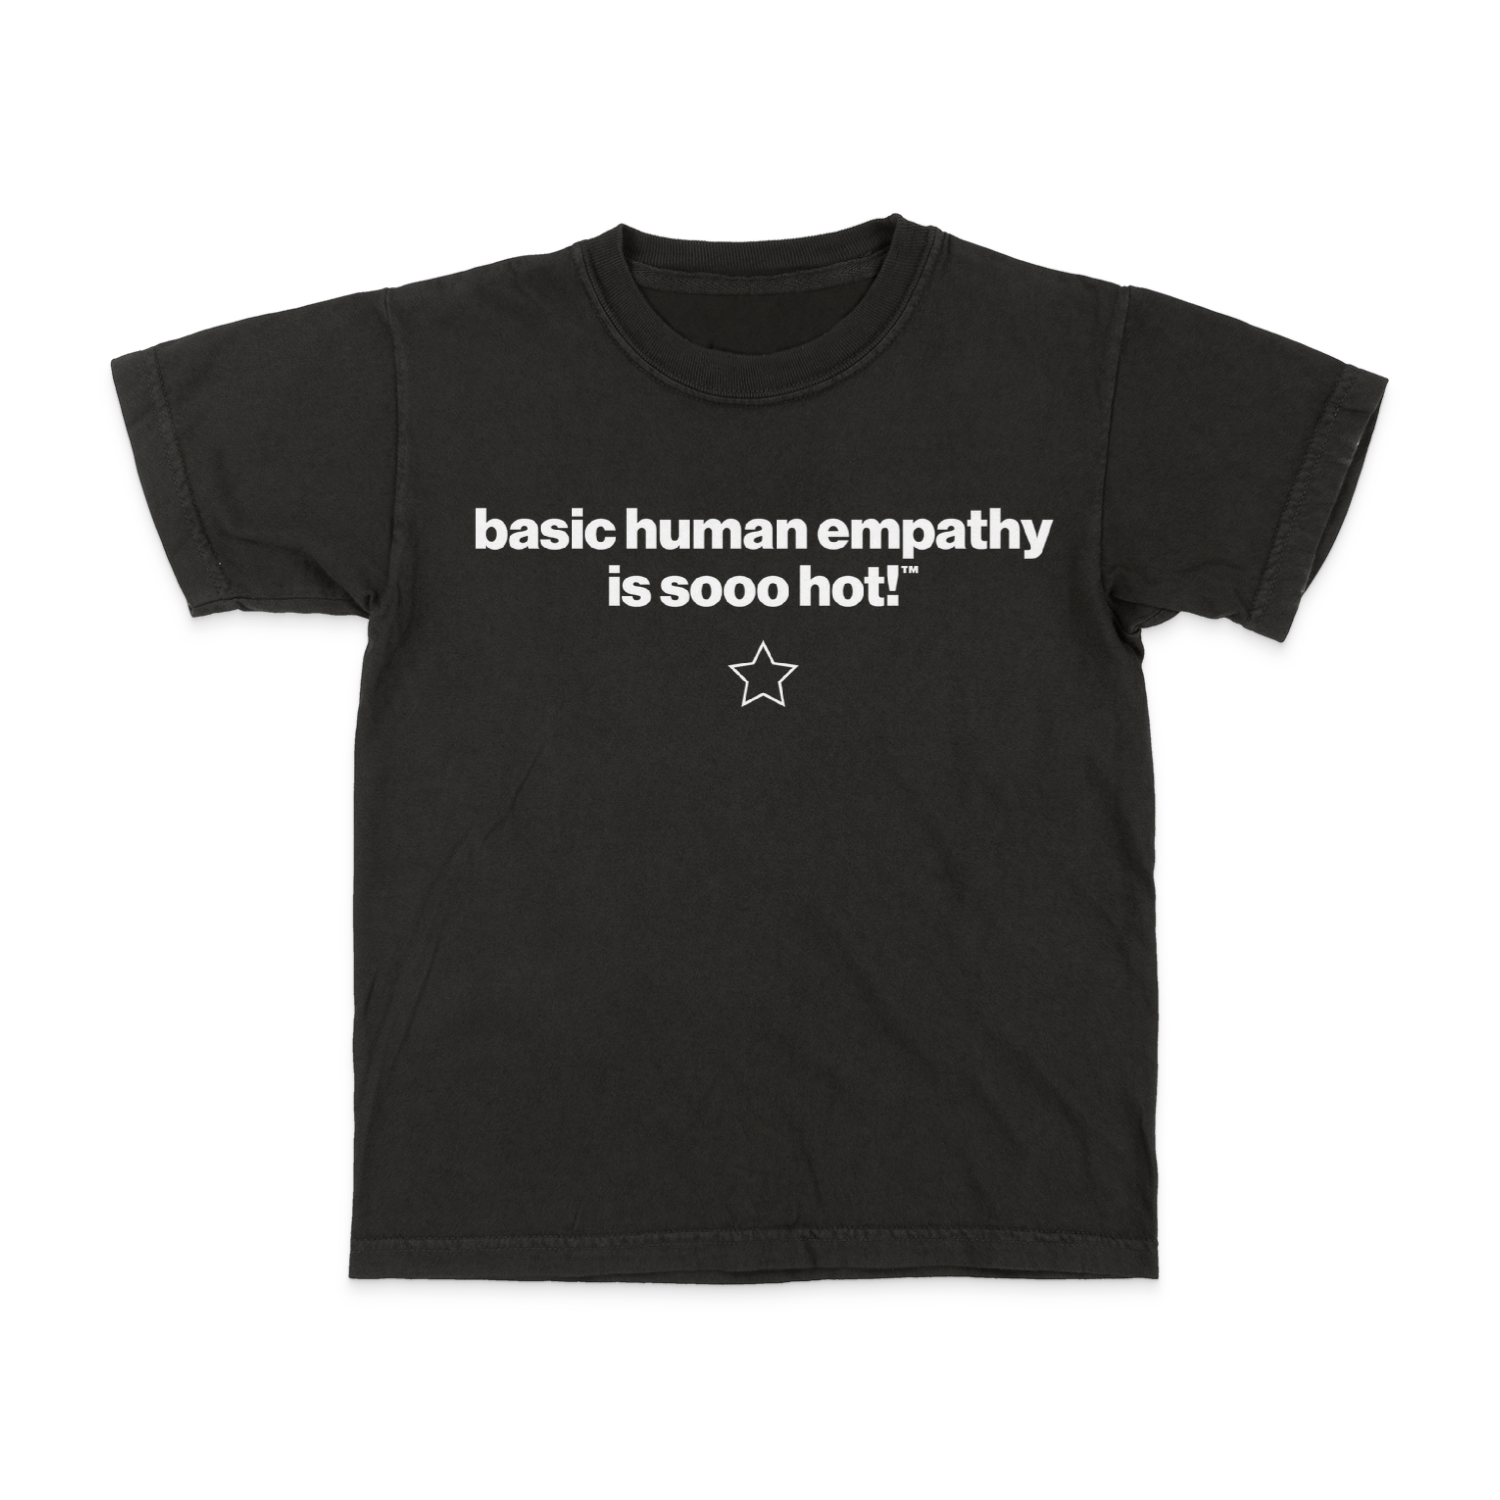 basic human empathy is sooo hot! Baby Tee (White/Black)